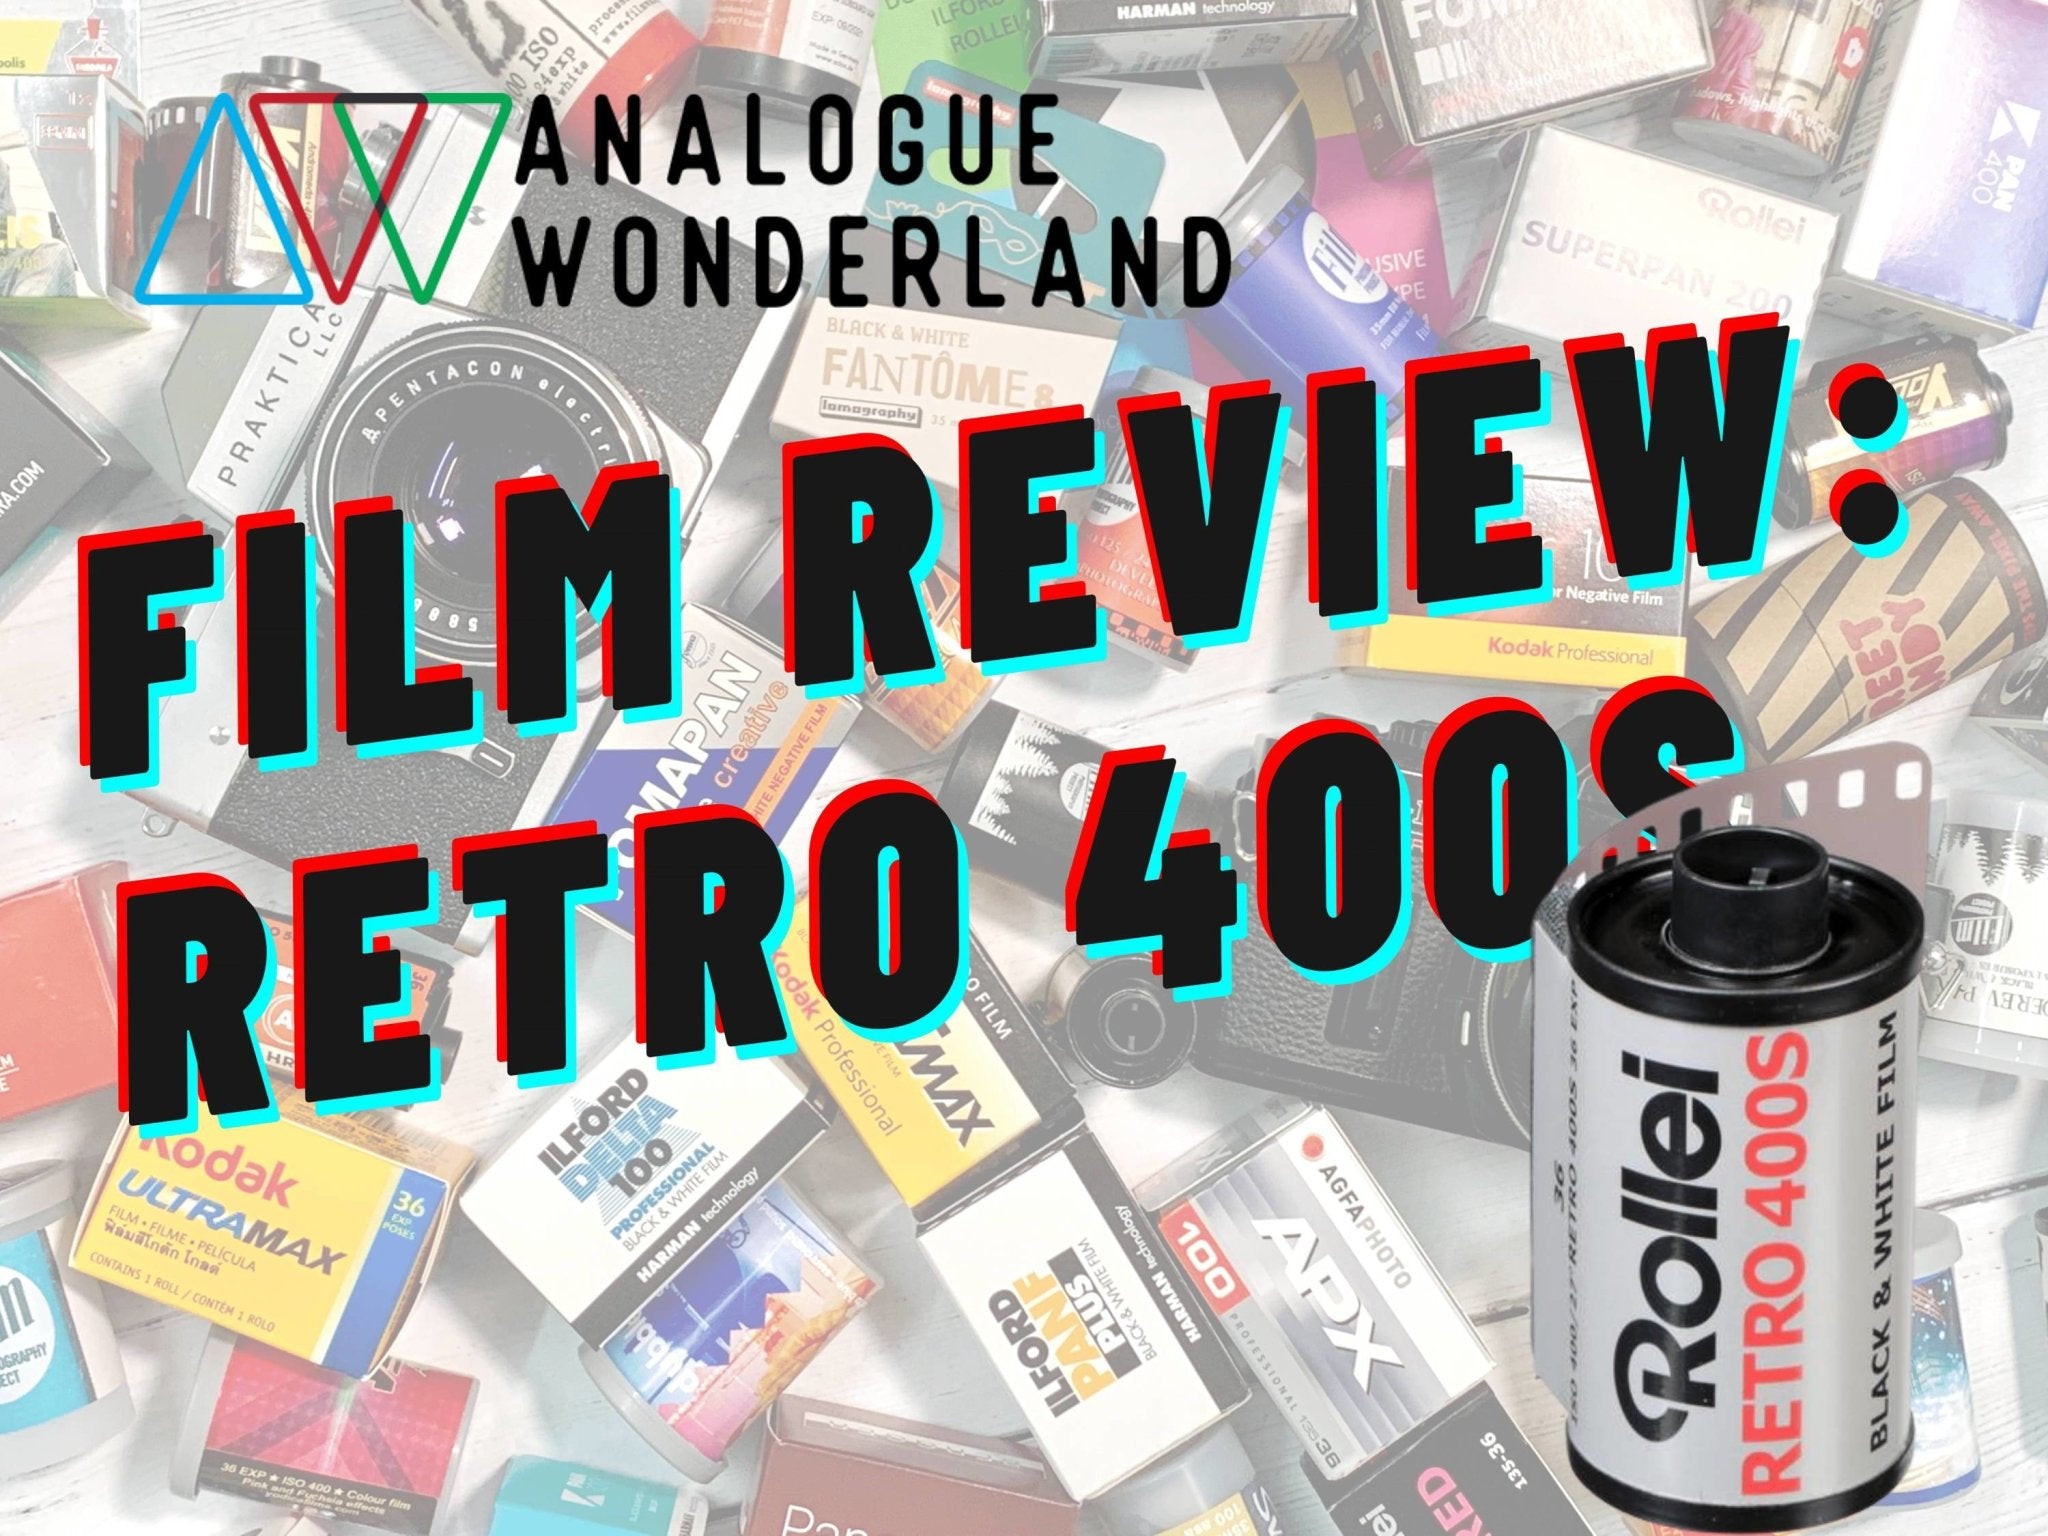 Rollei Retro 400S Review - Analogue Wonderland